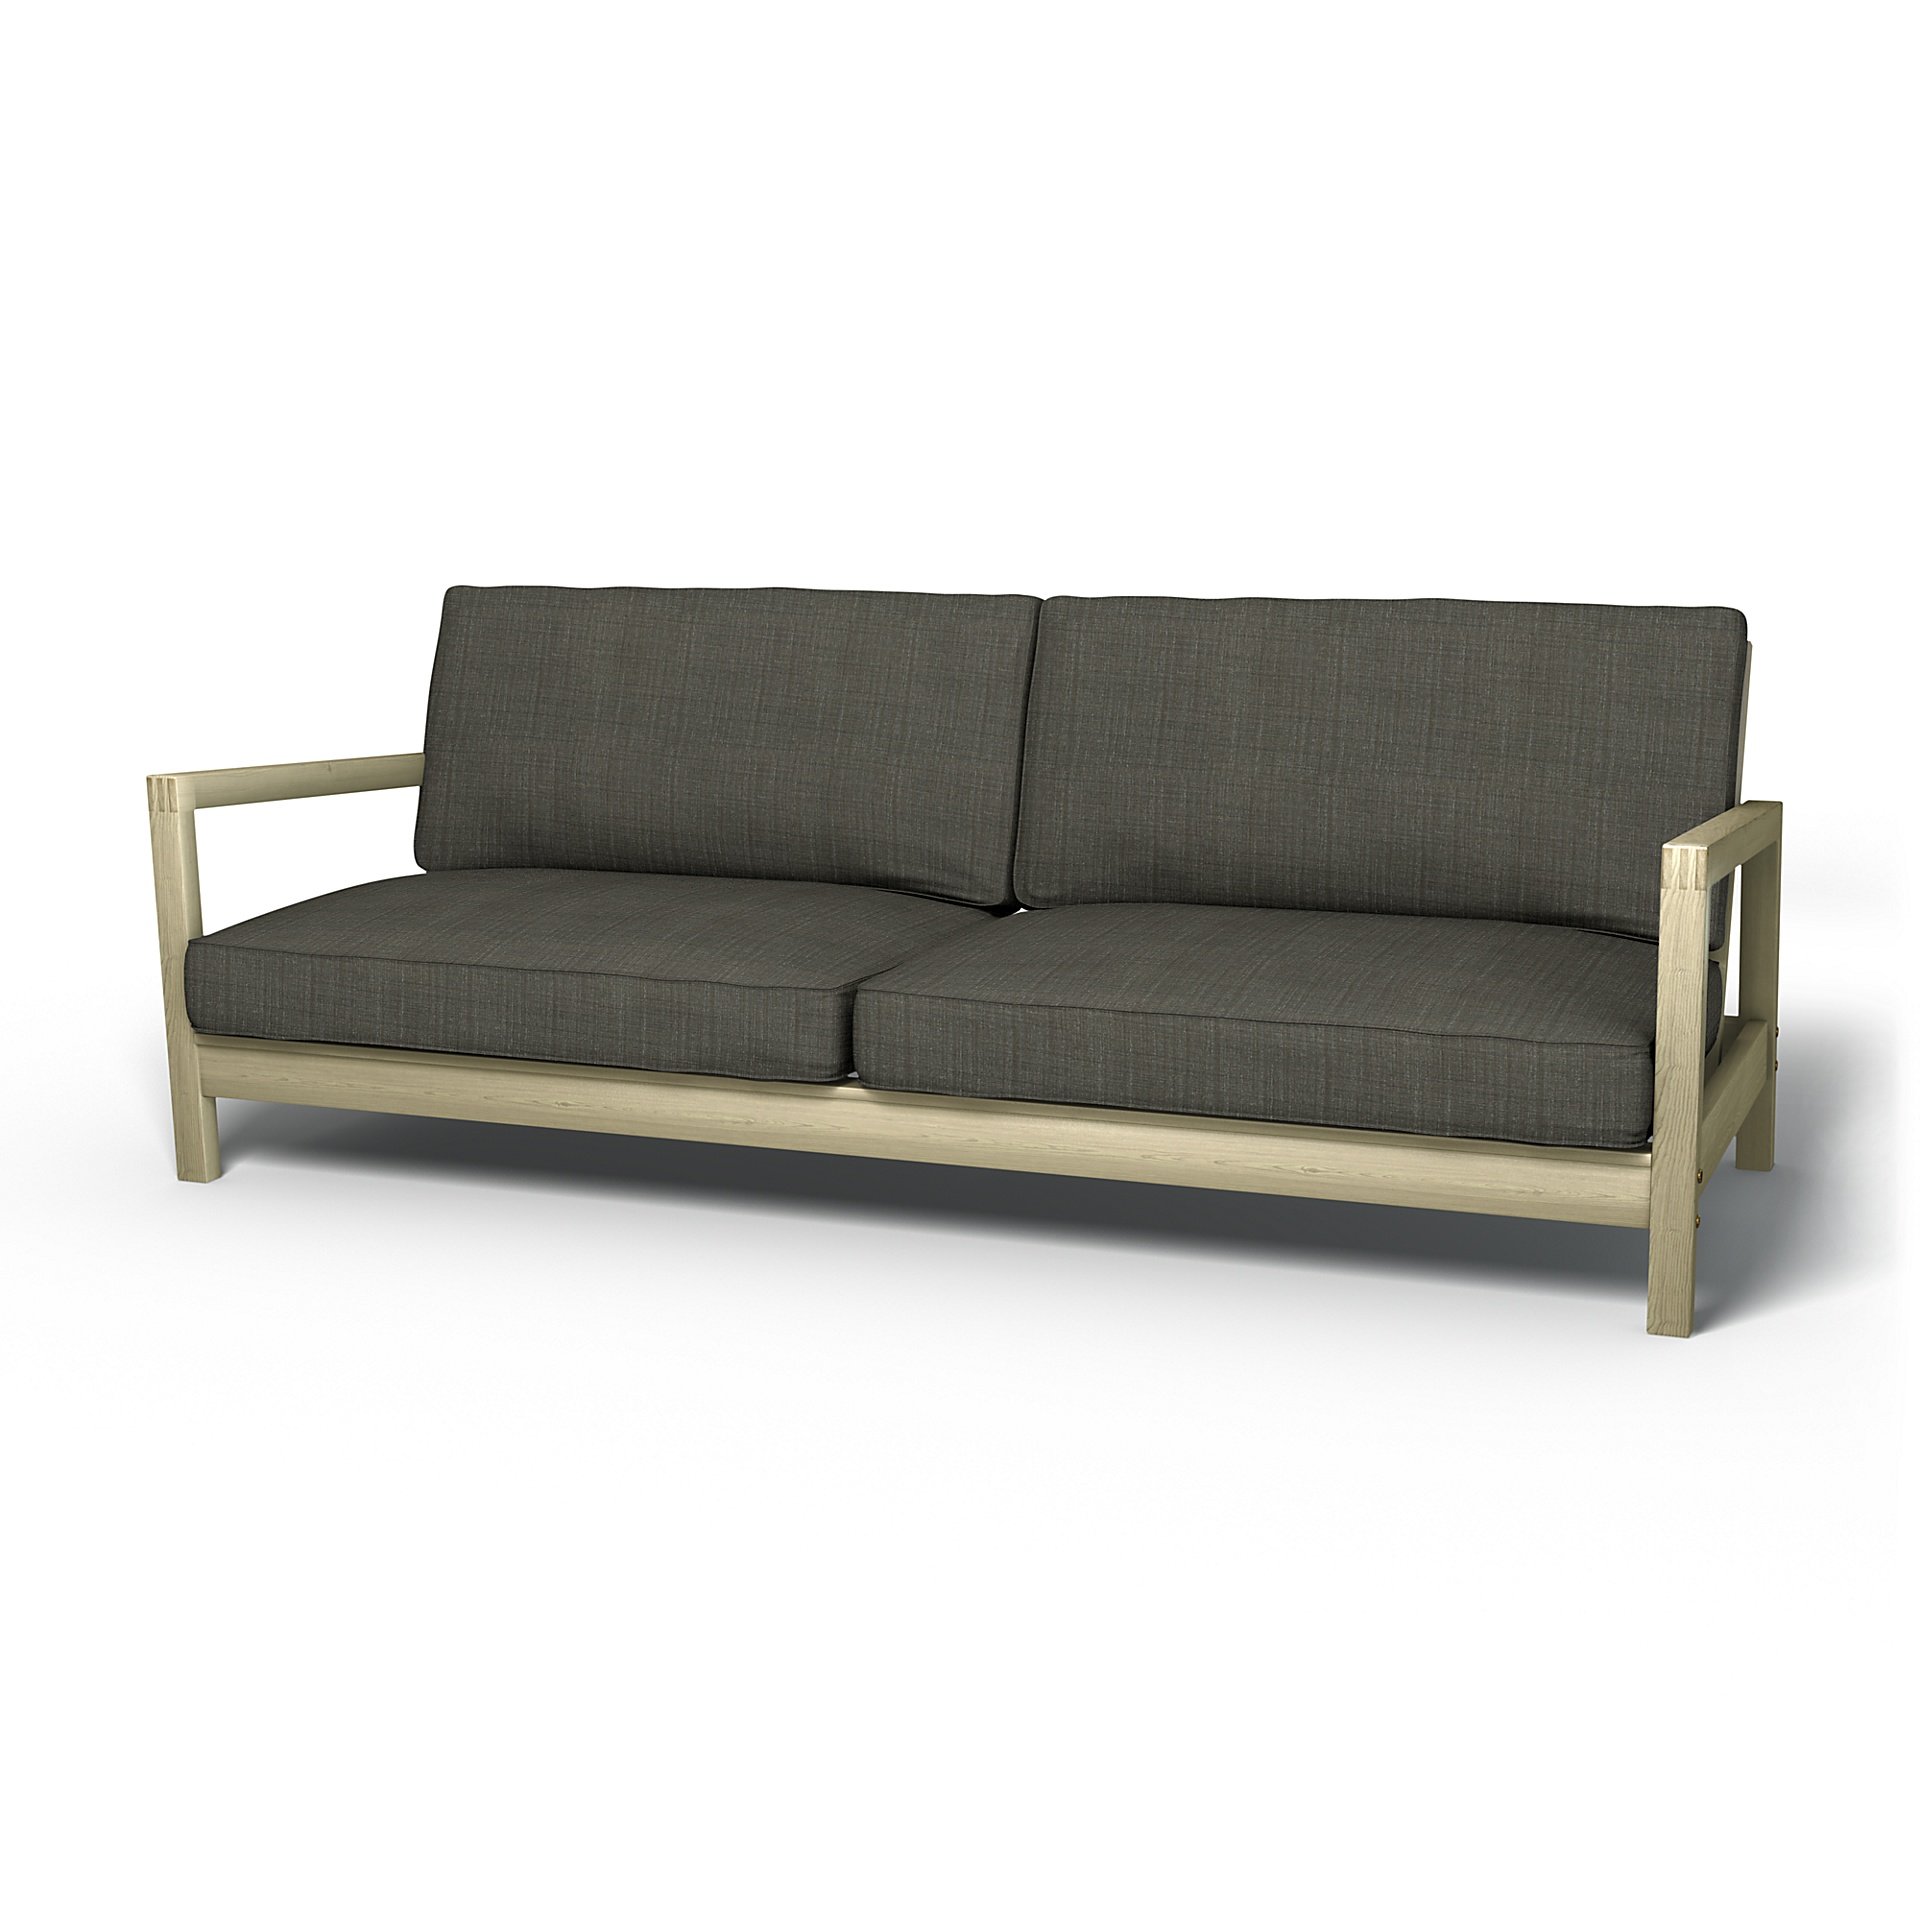 IKEA - Lillberg Sofa Bed Cover, Mole Brown, Boucle & Texture - Bemz